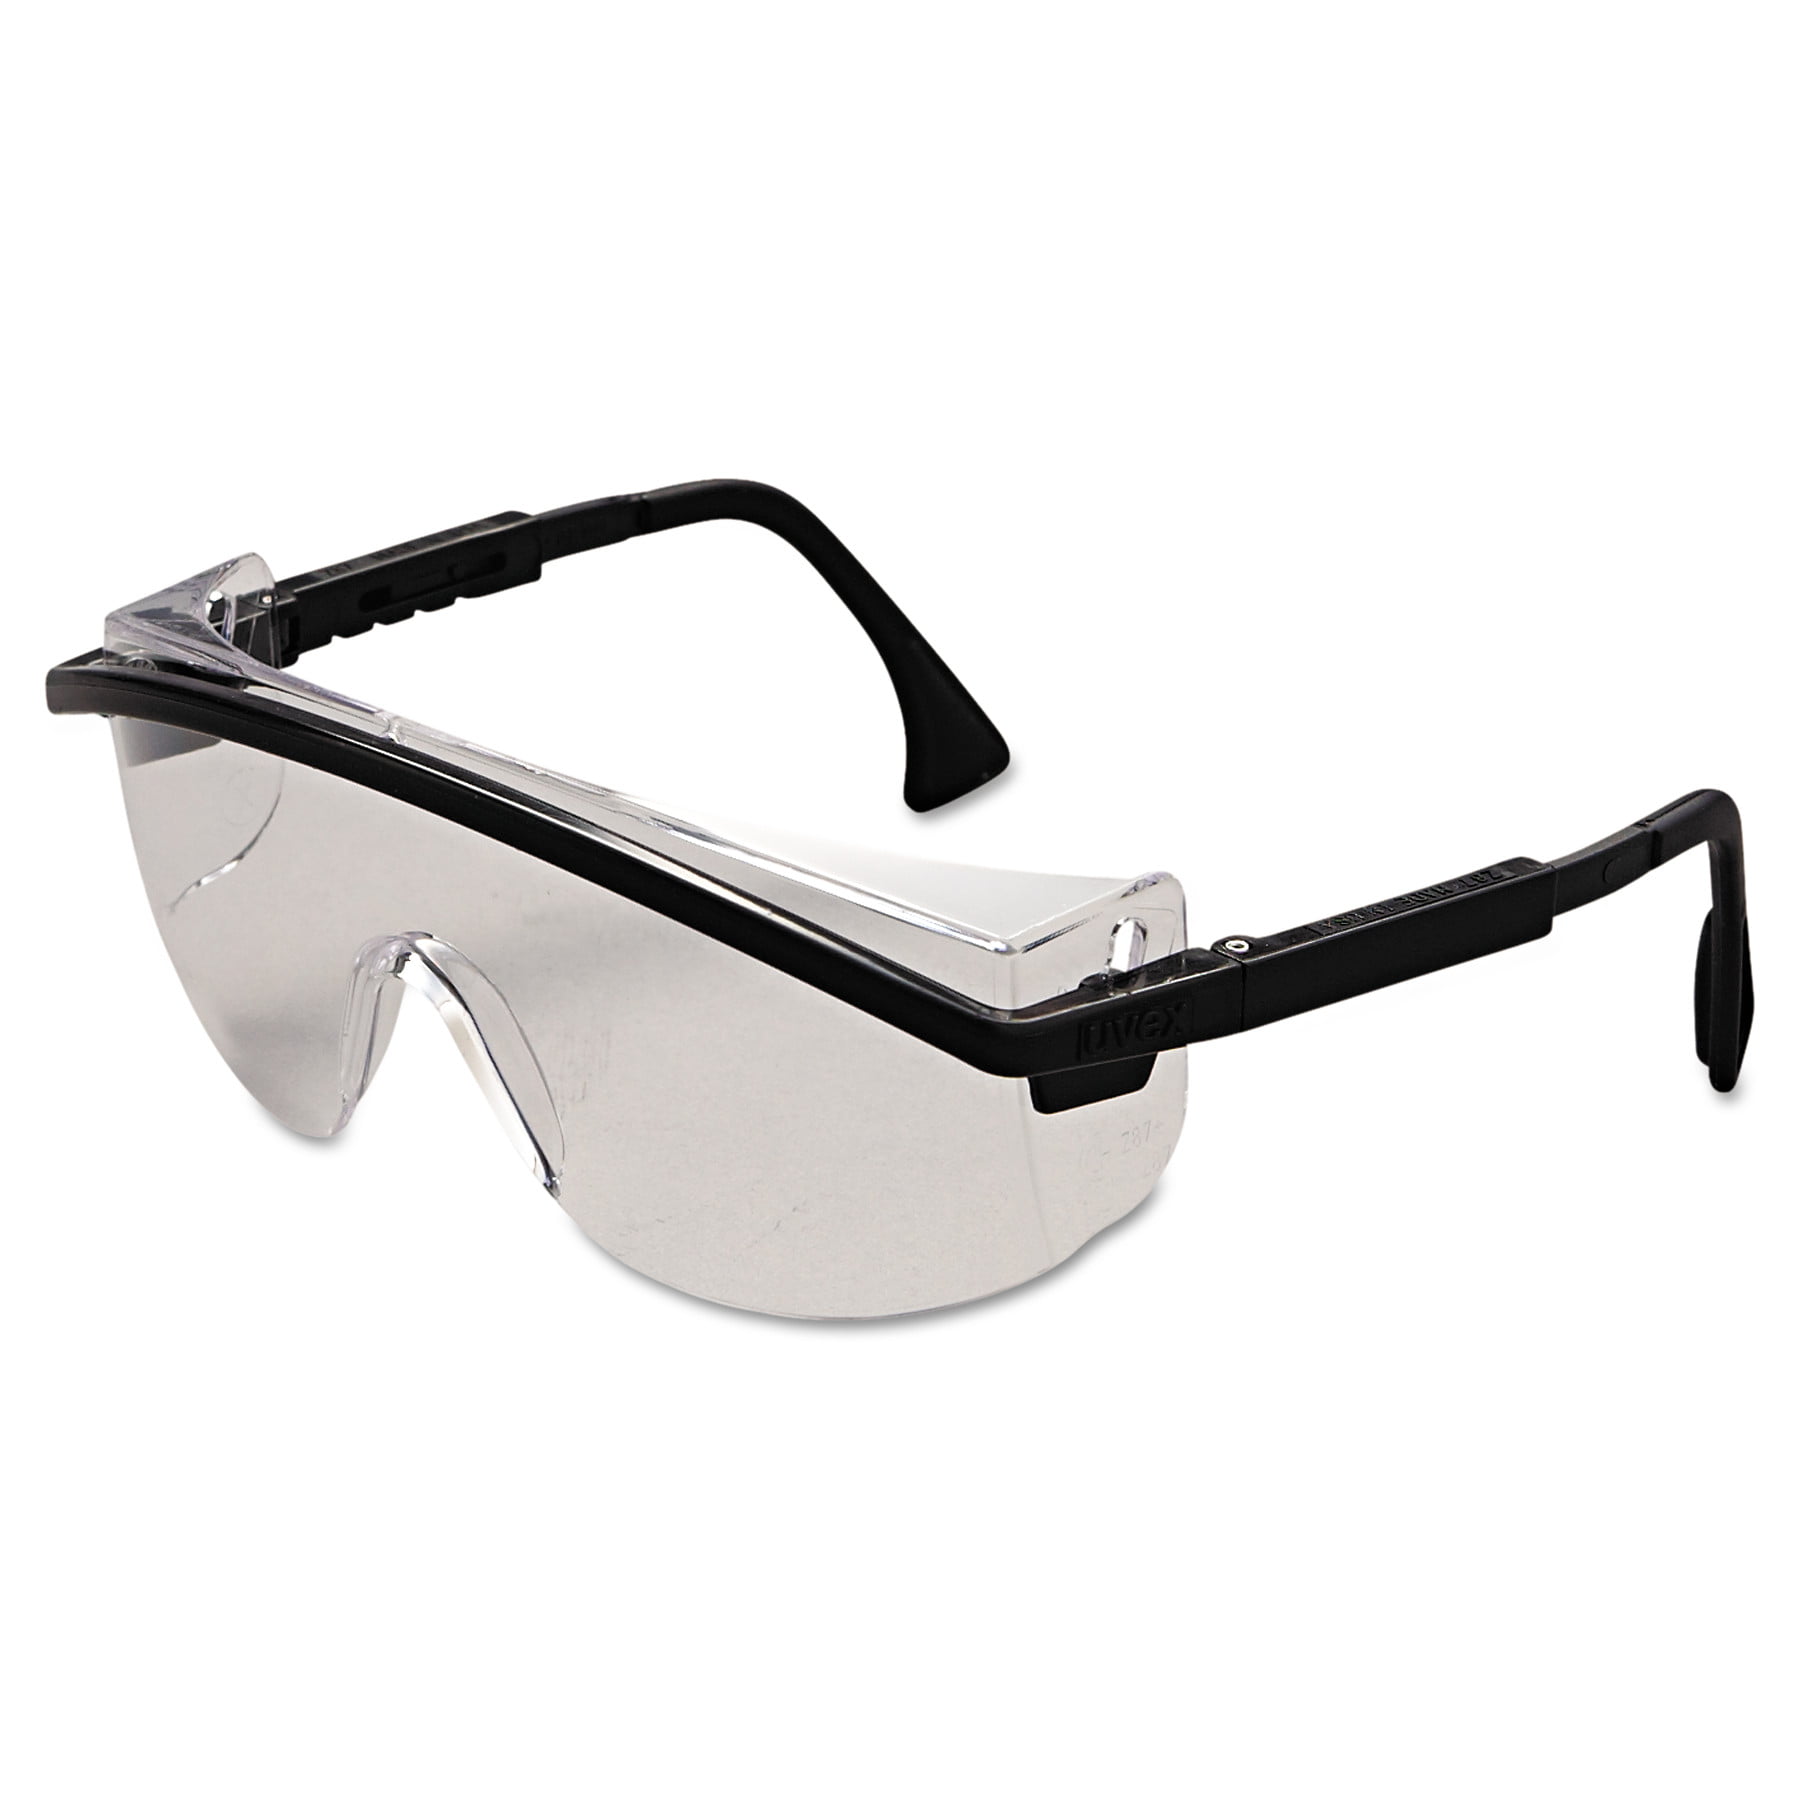 pairs  Safety Glasses anti fog UV protective  adjustable UVEX   SX0407Xgr 2 